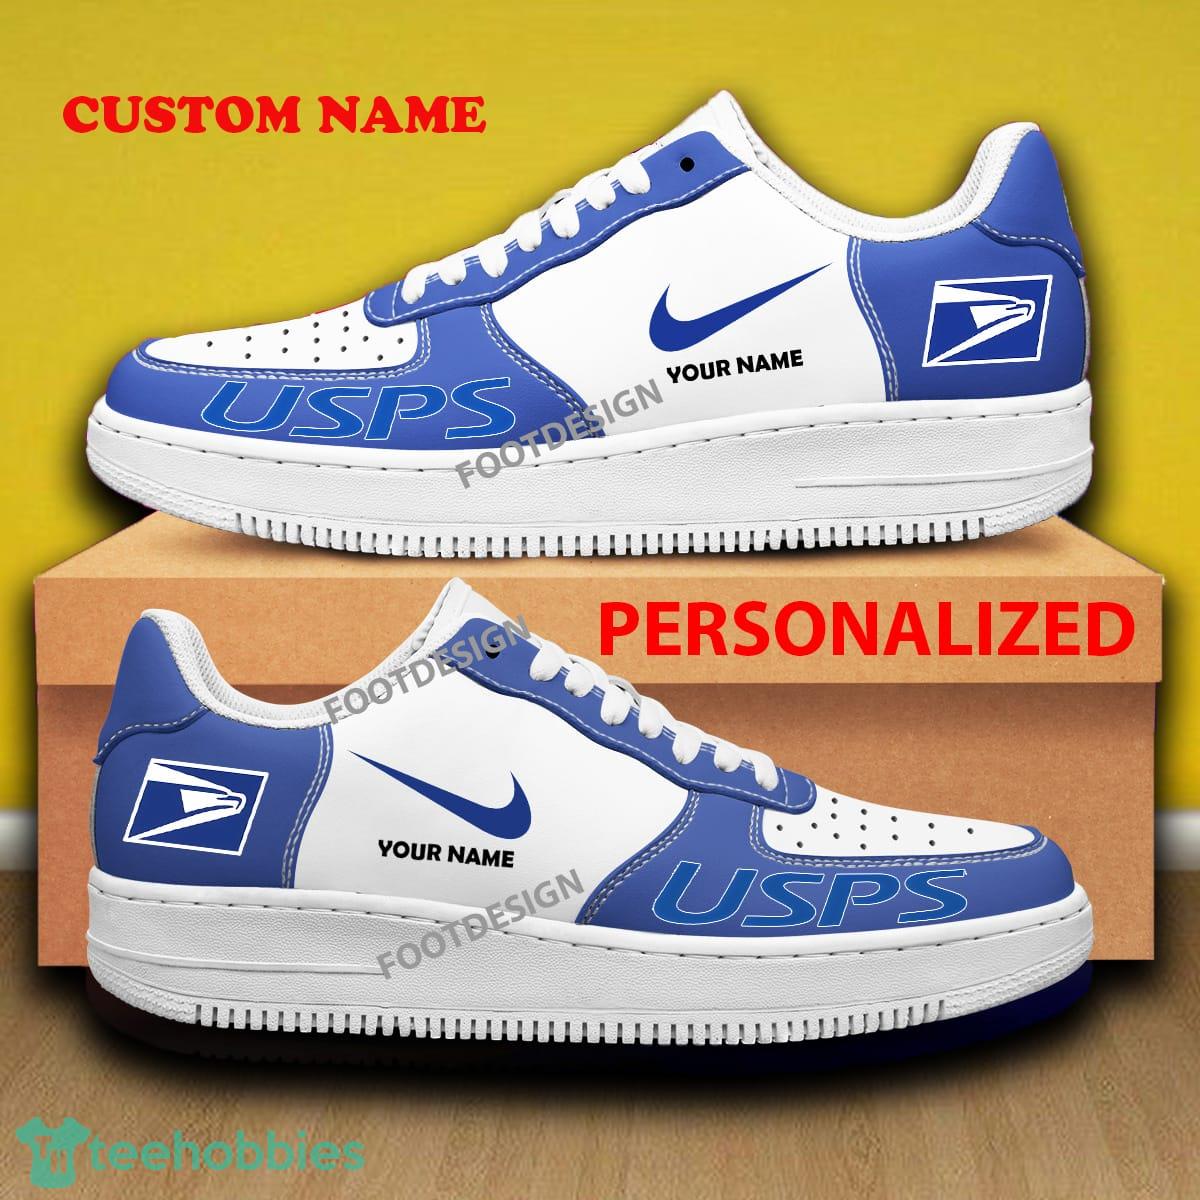 Custom Name Usps Air Force 1 Sneakers Brand All Over Print Gift - Custom Name Usps Air Force 1 Sneakers Brand All Over Print Gift